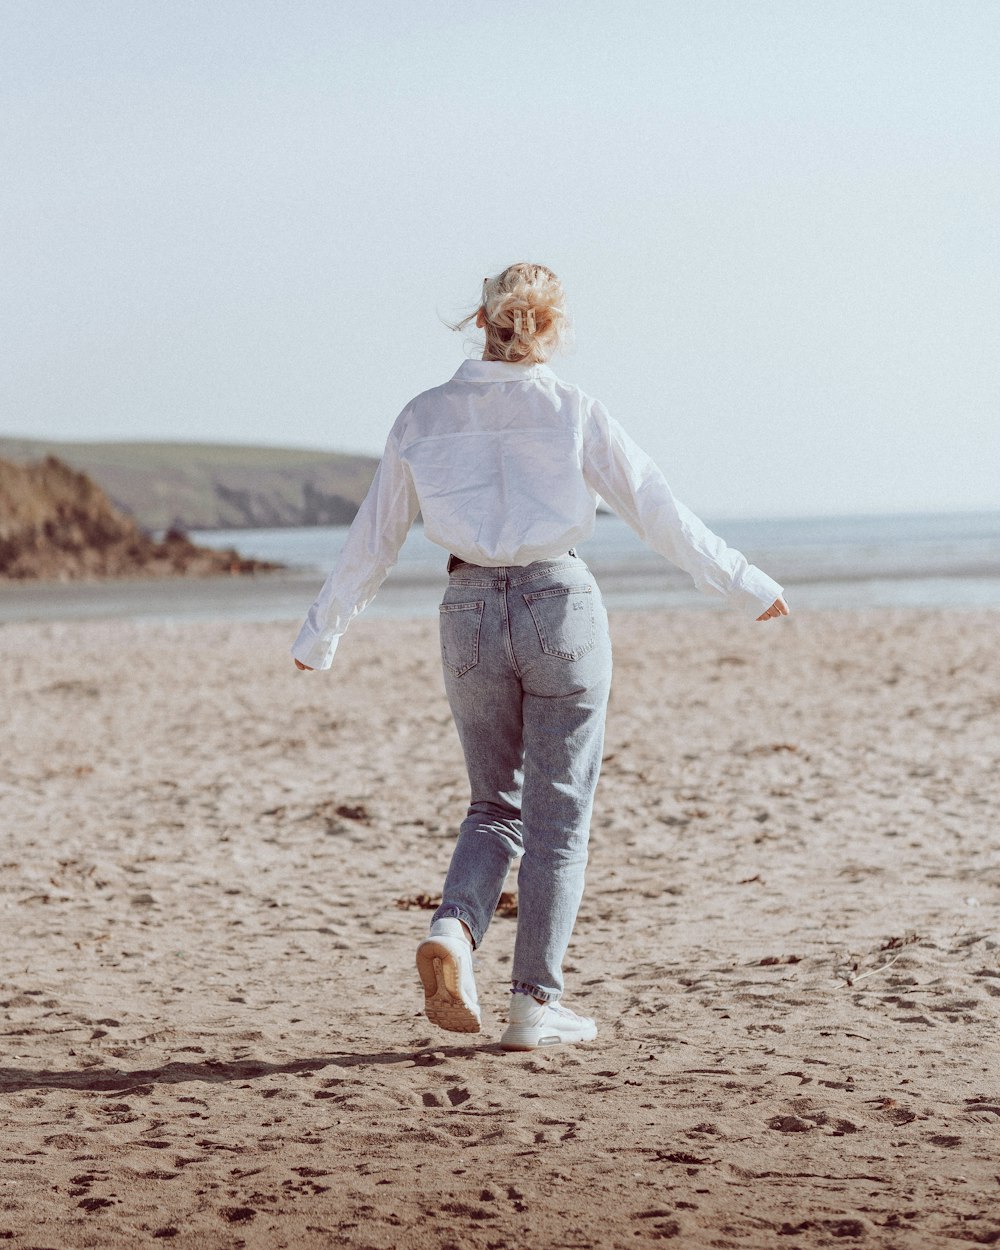 a woman walking across a sandy beach next to the ocean